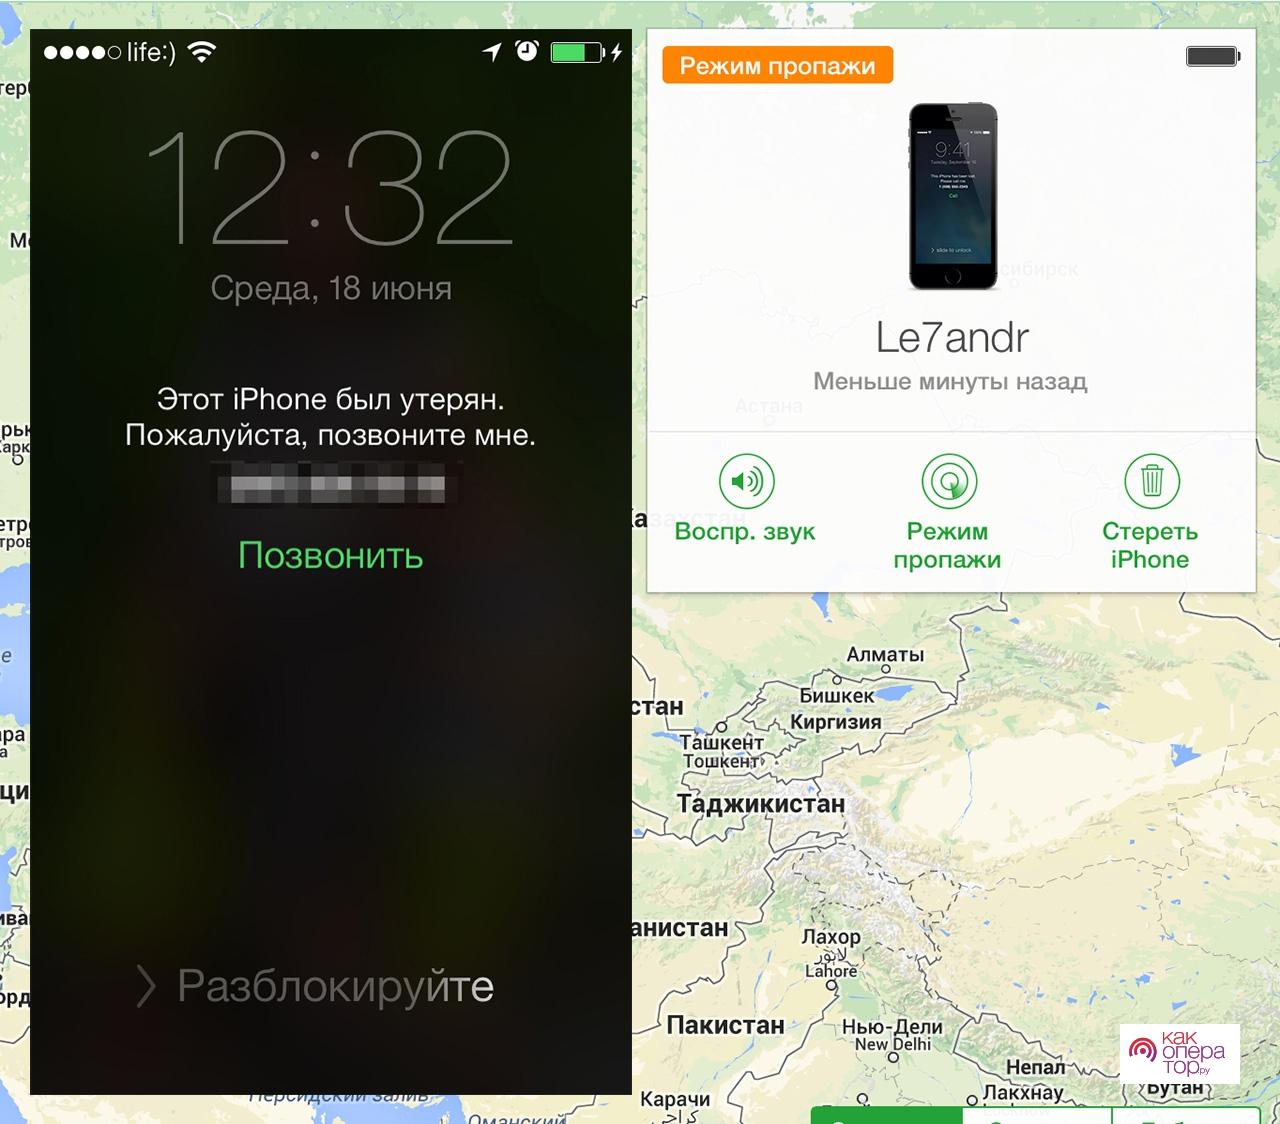 Блокировка iPhone: Режим пропажи в Найти iPhone, как включить и выключить режим пропажи на iPhone через iCloud или другой iOS-девайс